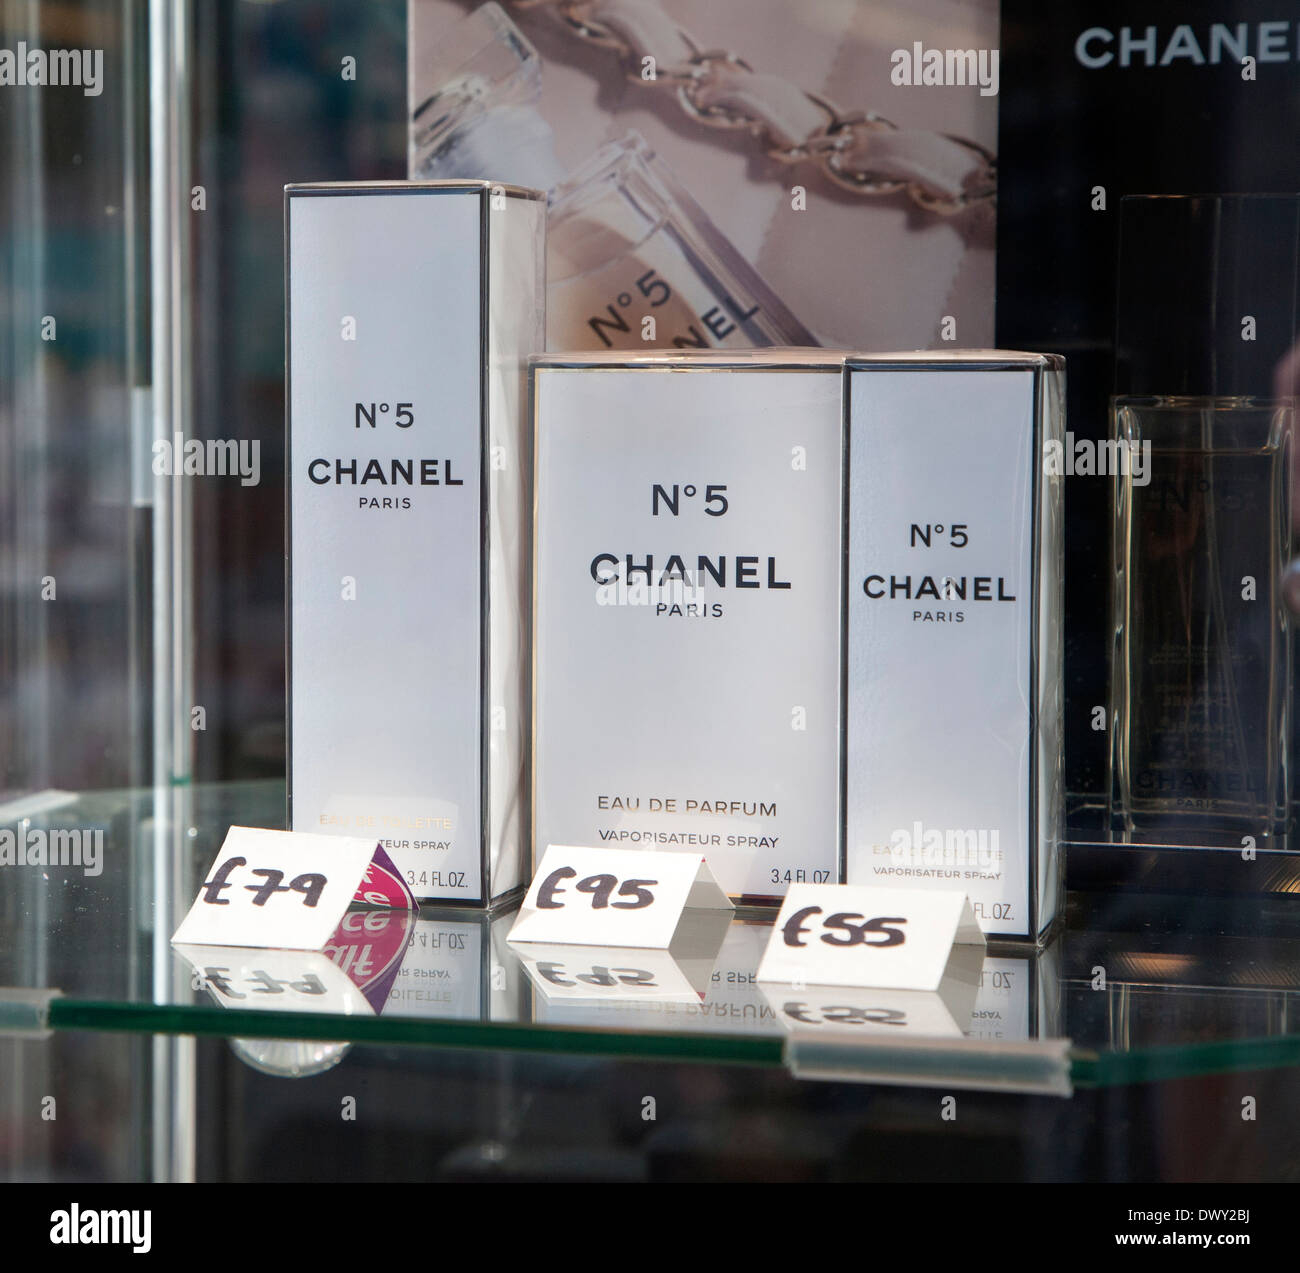 ebay chanel 5 perfume